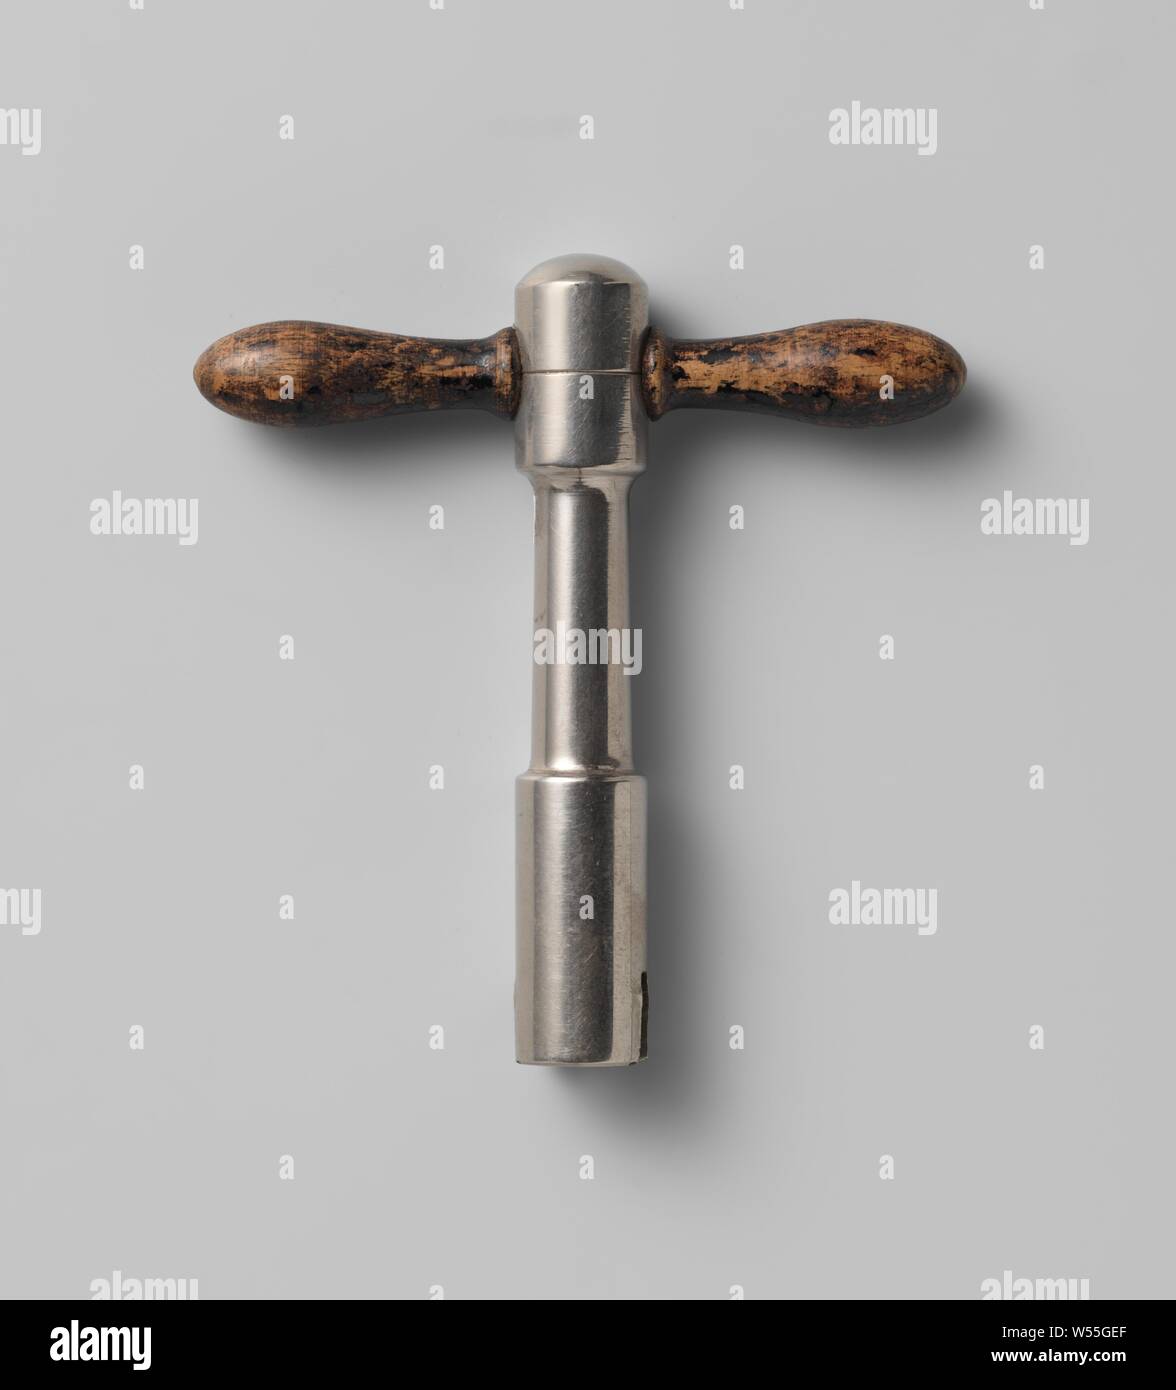 Voting hammer, anonymous, c. 1900 - c. 1950, metal, wood (plant material), h 10.5 cm × w 6.5 cm × d 1.0 cm Stock Photo